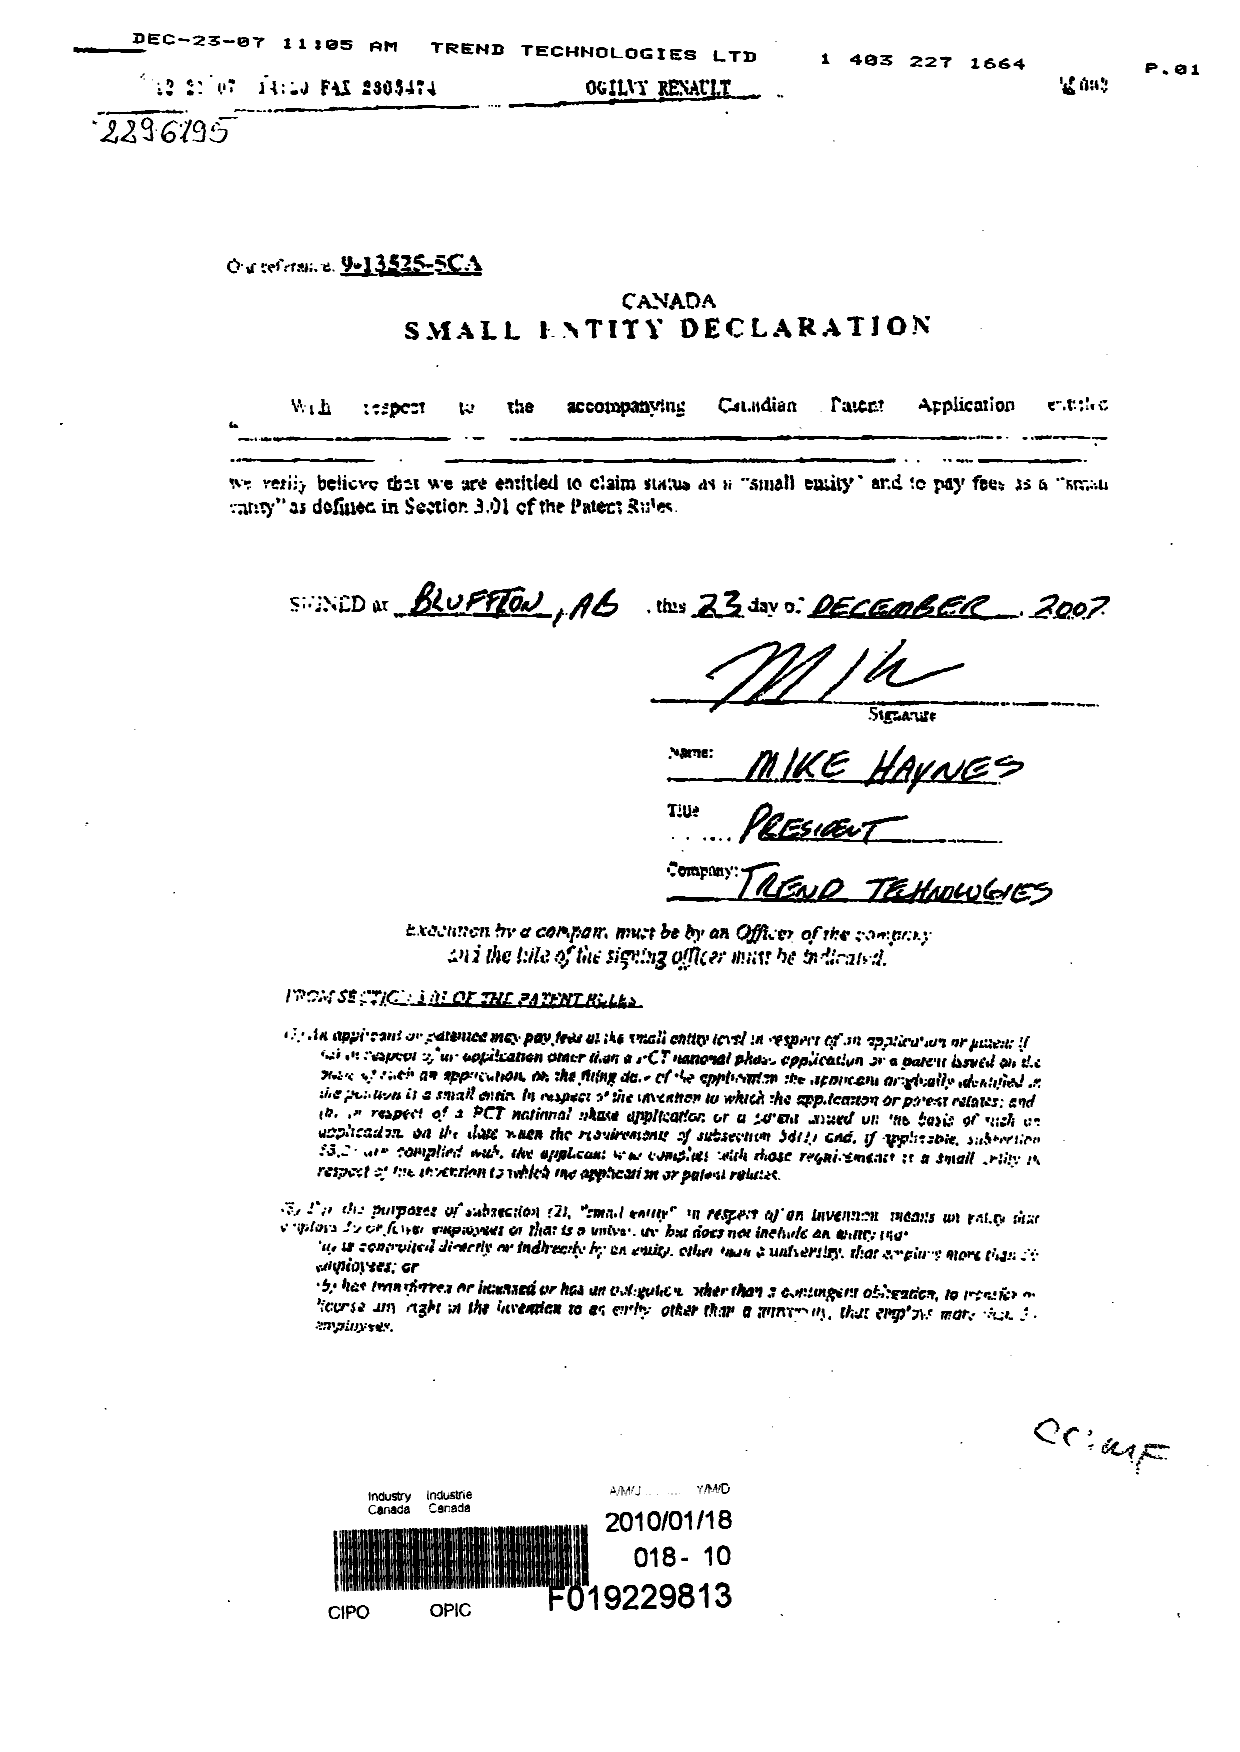 Canadian Patent Document 2296195. Correspondence 20100118. Image 1 of 2